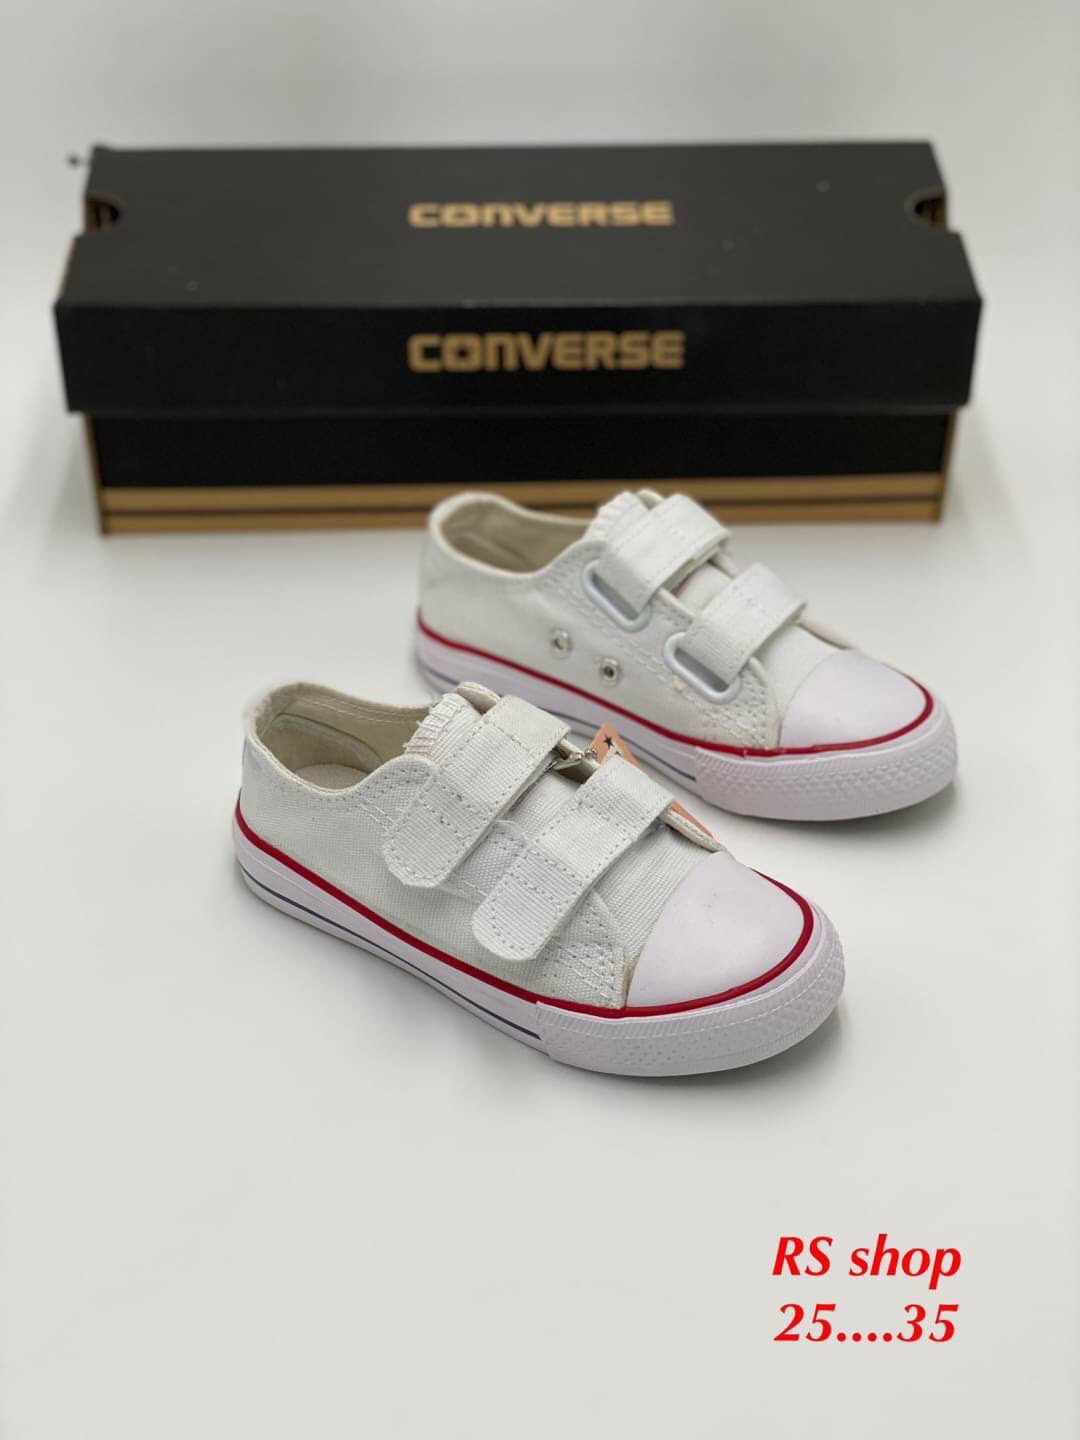 converse รองเท้าผ้าใบสำหรับเด็ก